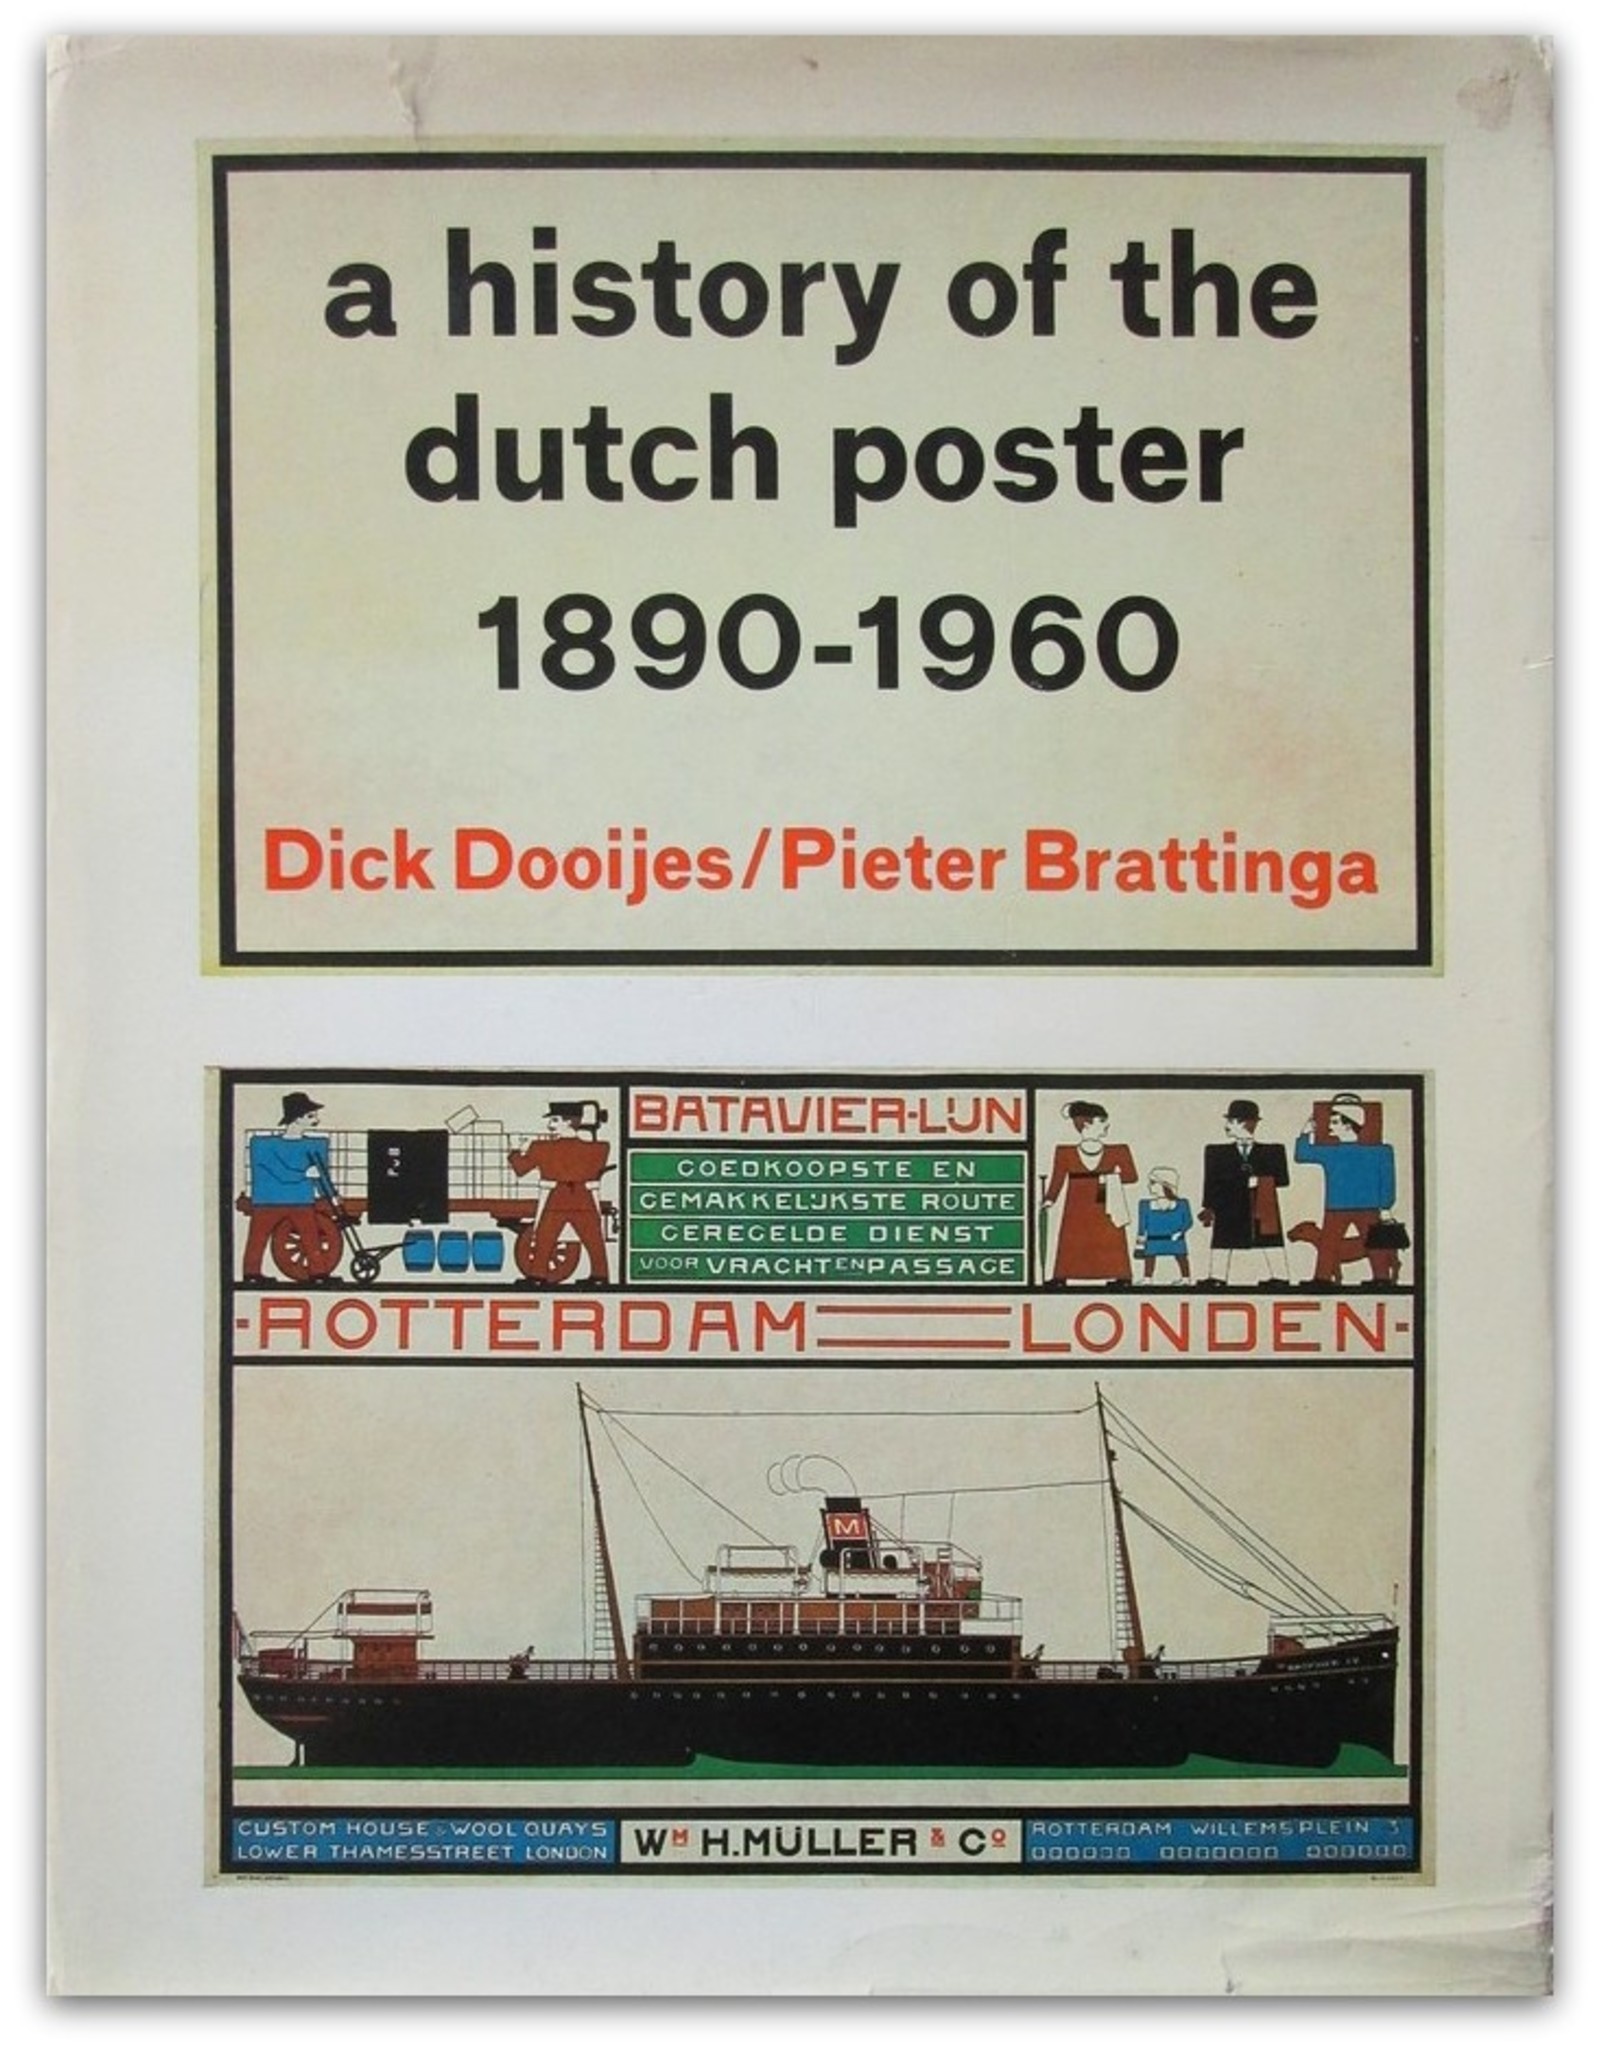 Dick Dooijes & Pieter Brattinga - A history of the Dutch poster 1890-1960. Introduction by prof. dr. H.L.C. Jaffé